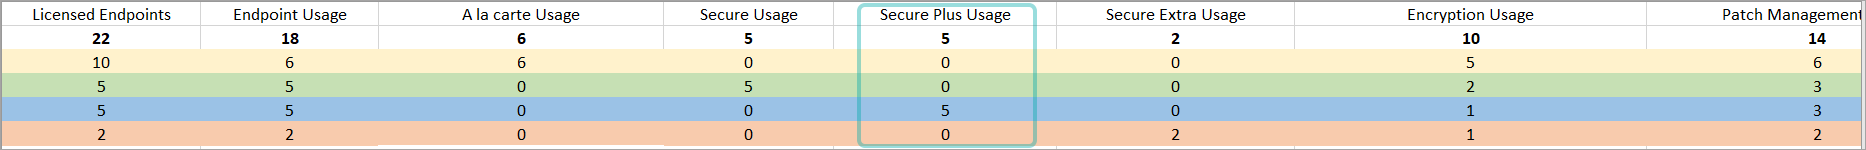 monthly__secureplus_usage_340181_en.png